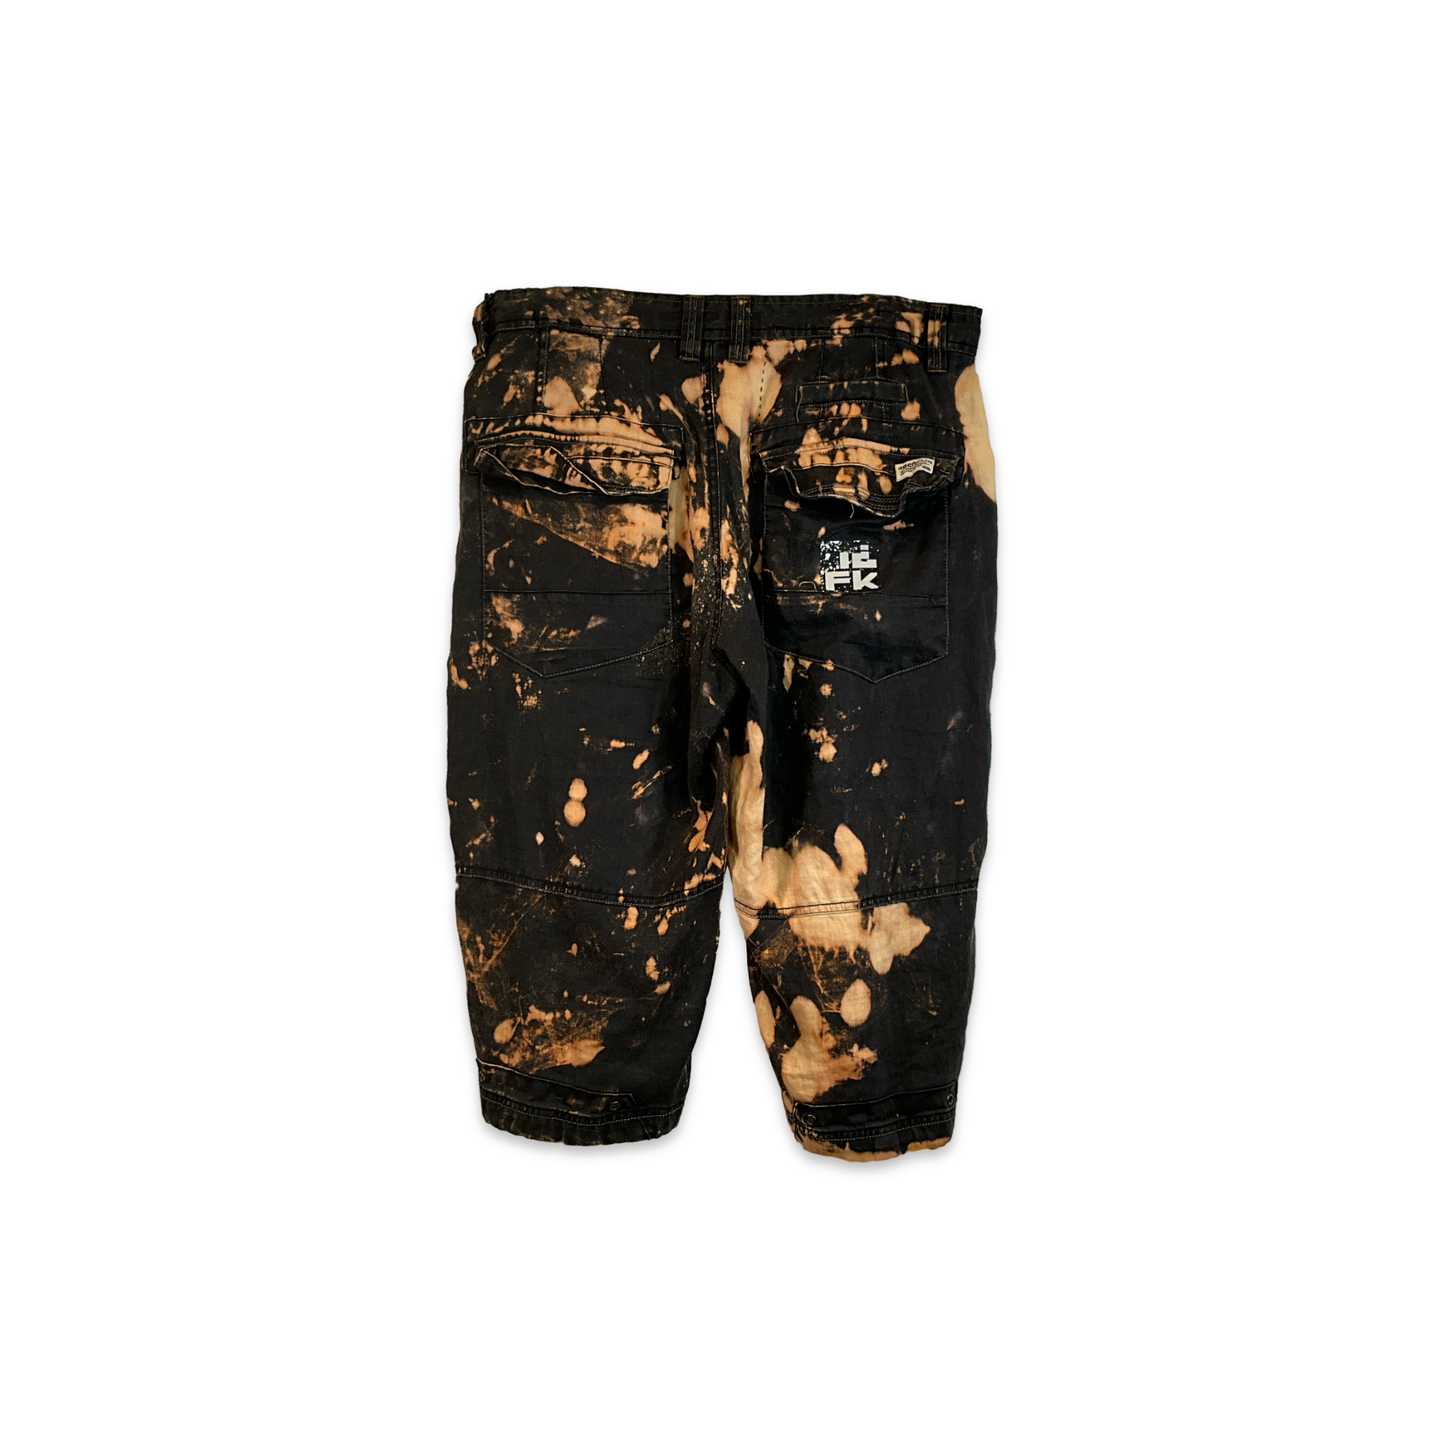 Burnt-Out Bleach Black Shorts